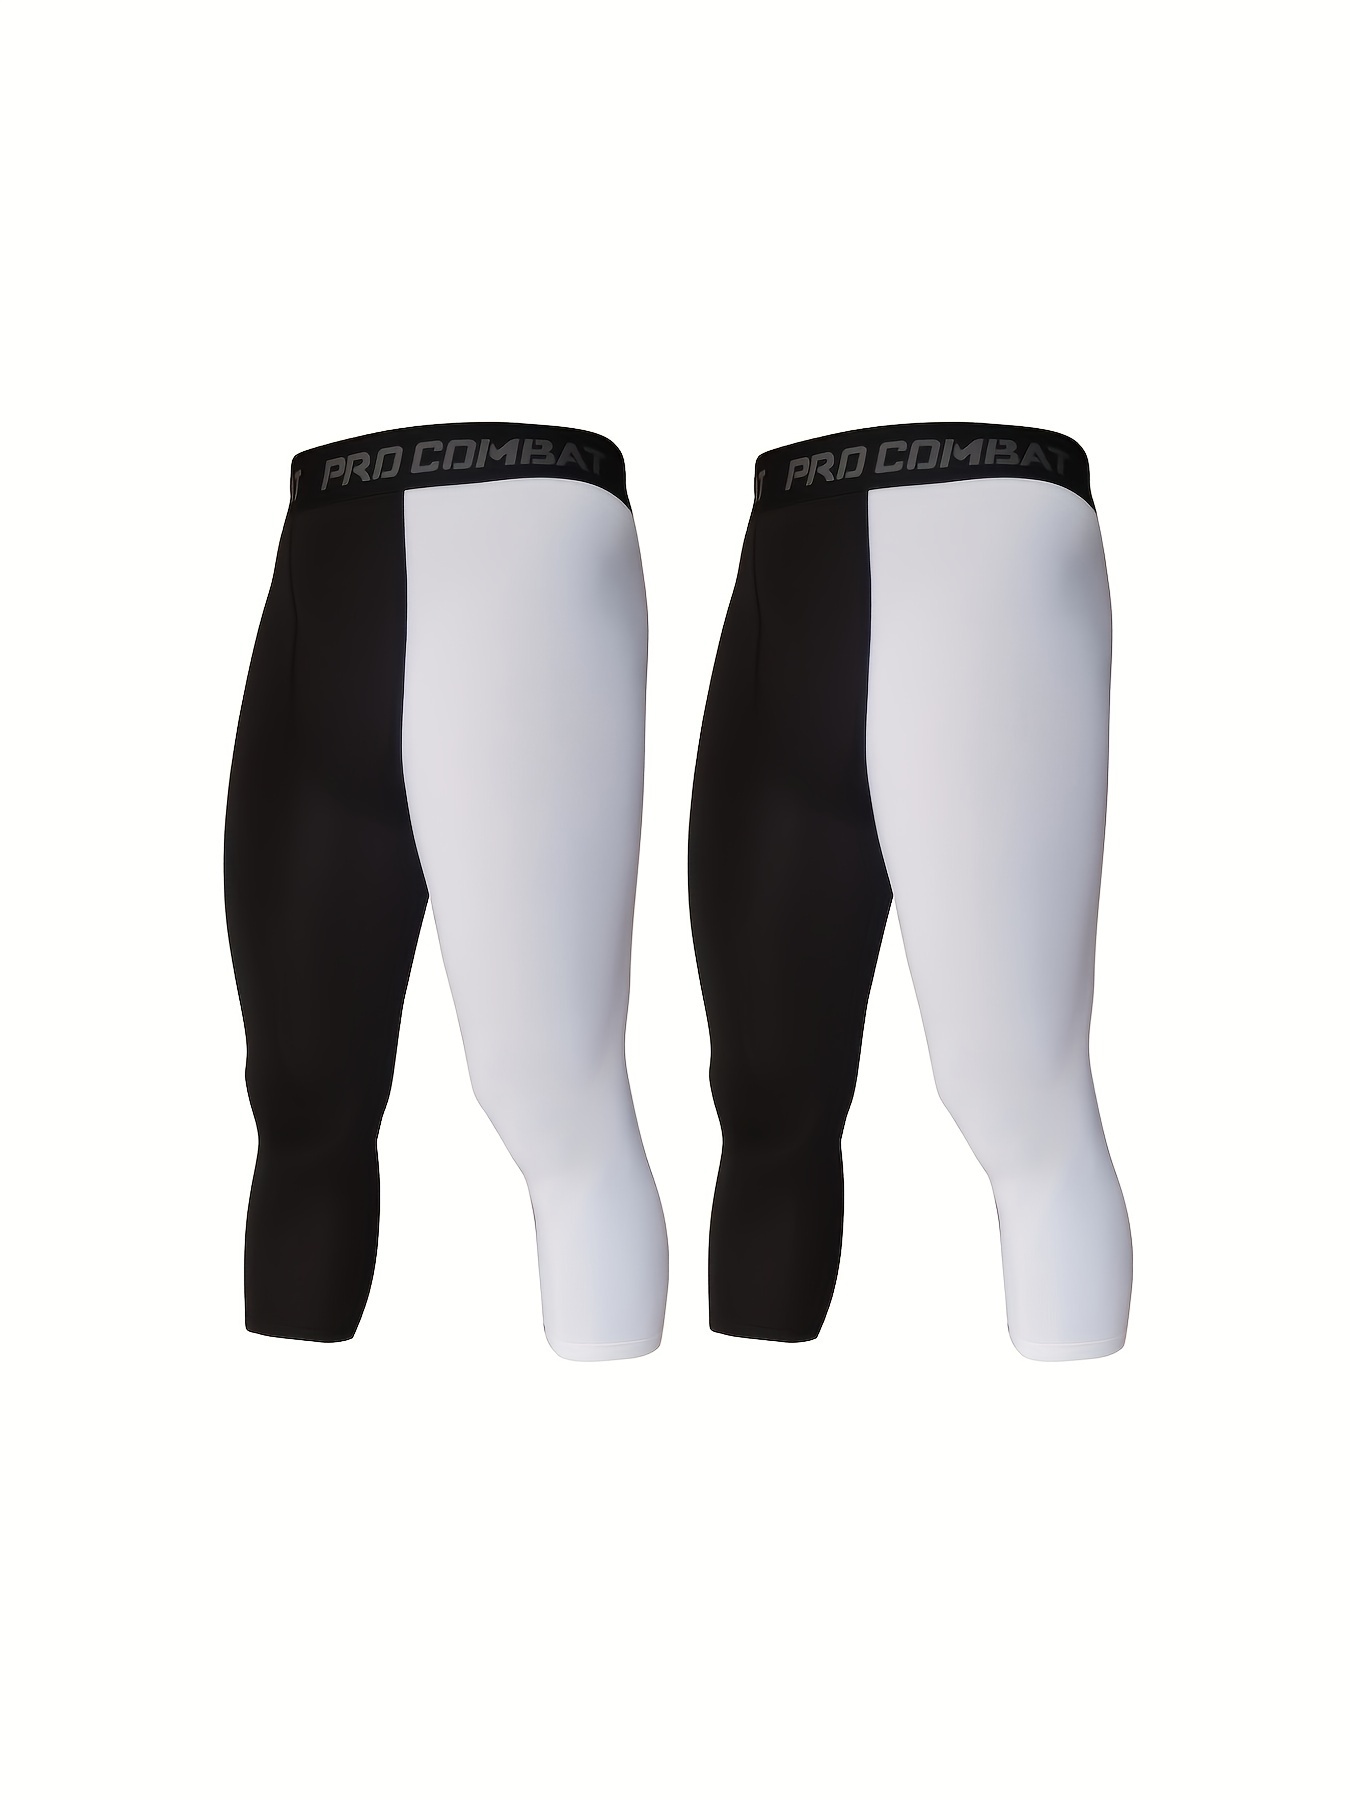 Nike Color Block Sports leggings in black and white